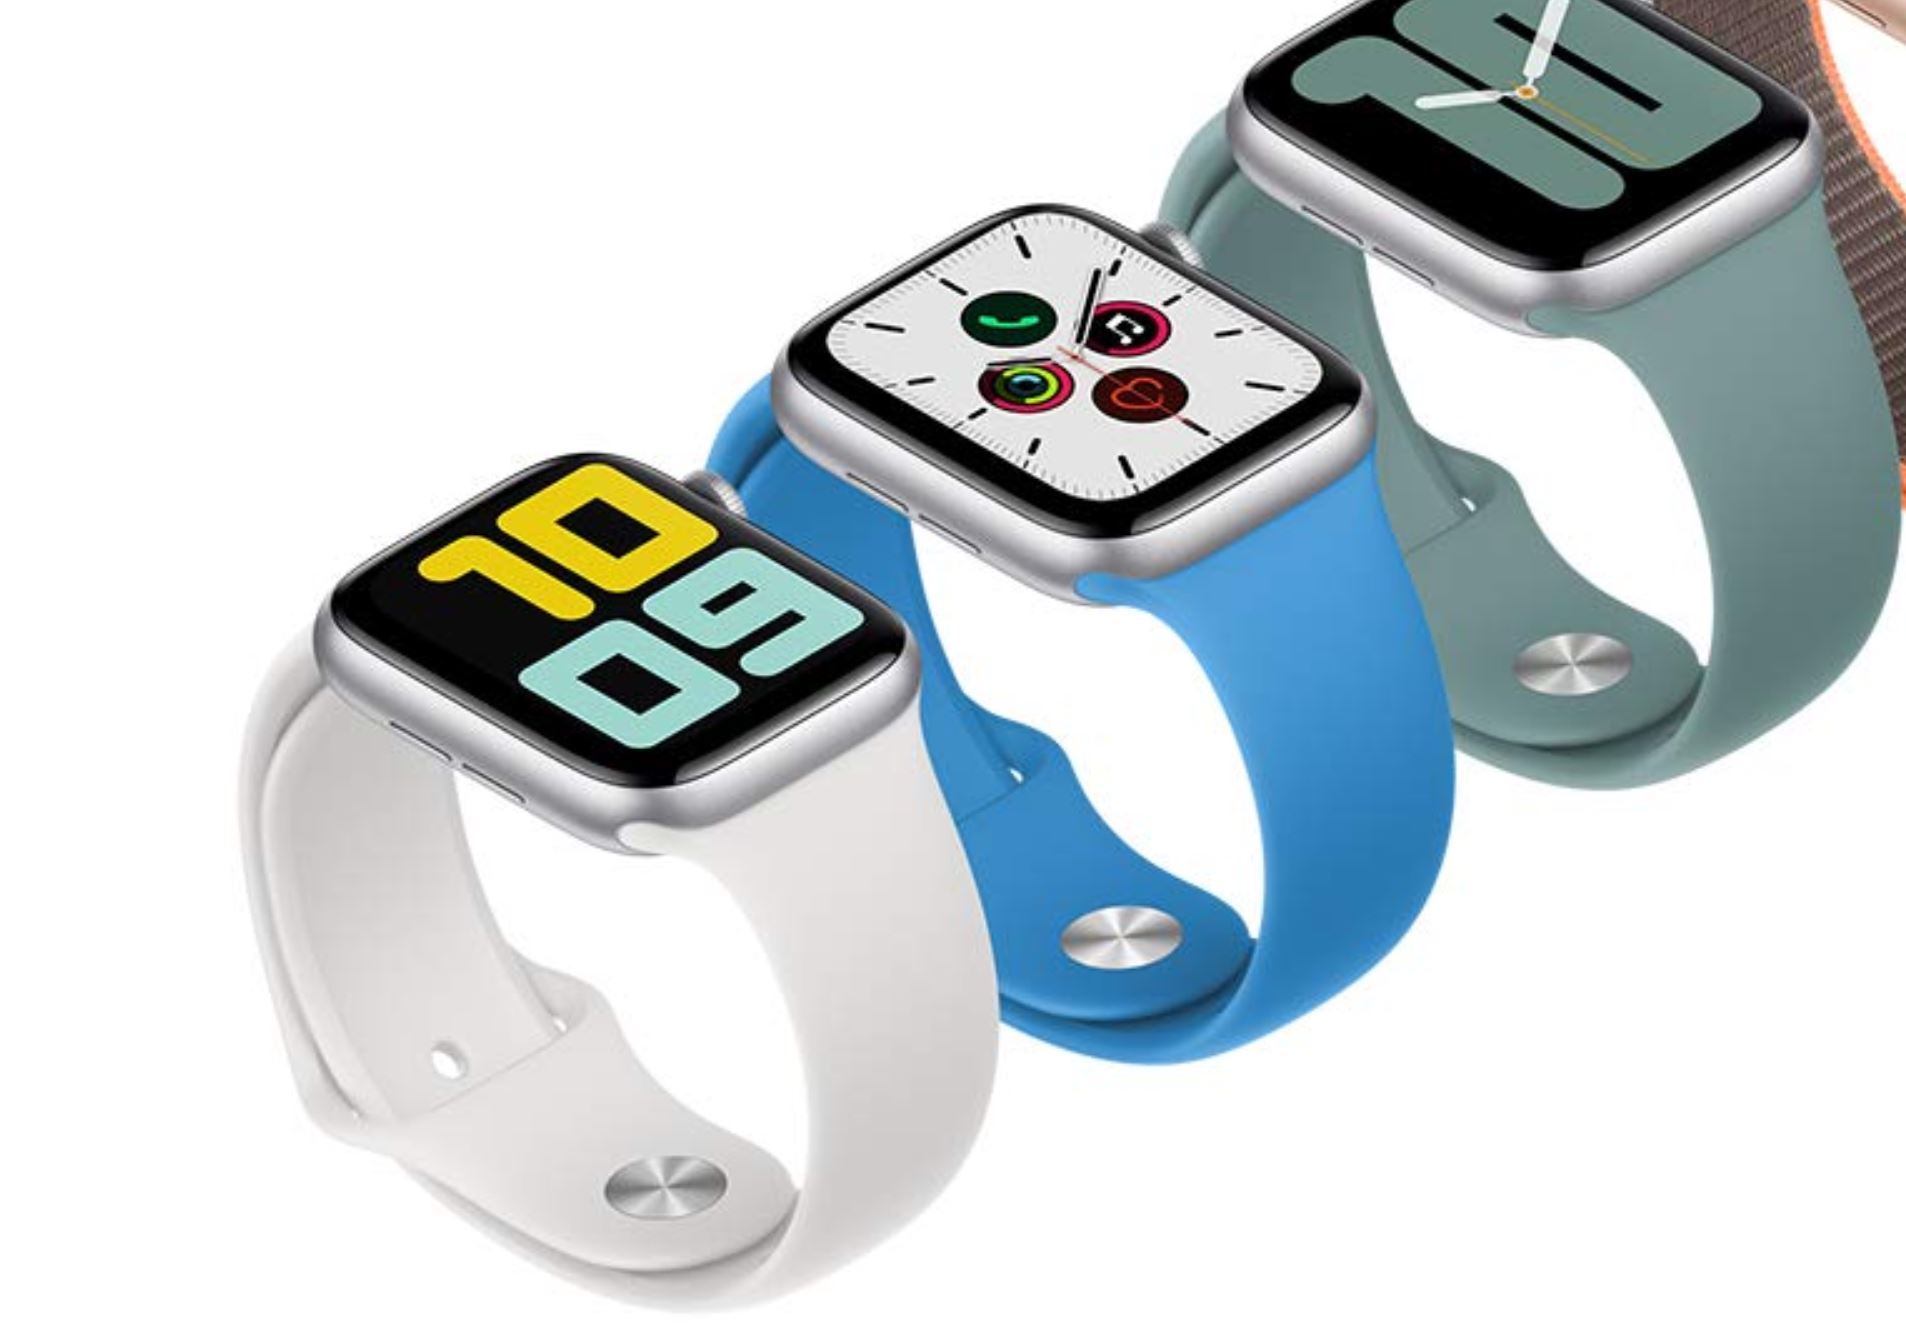 Deal Alert: Get a huge discount on Apple Watch Series 5